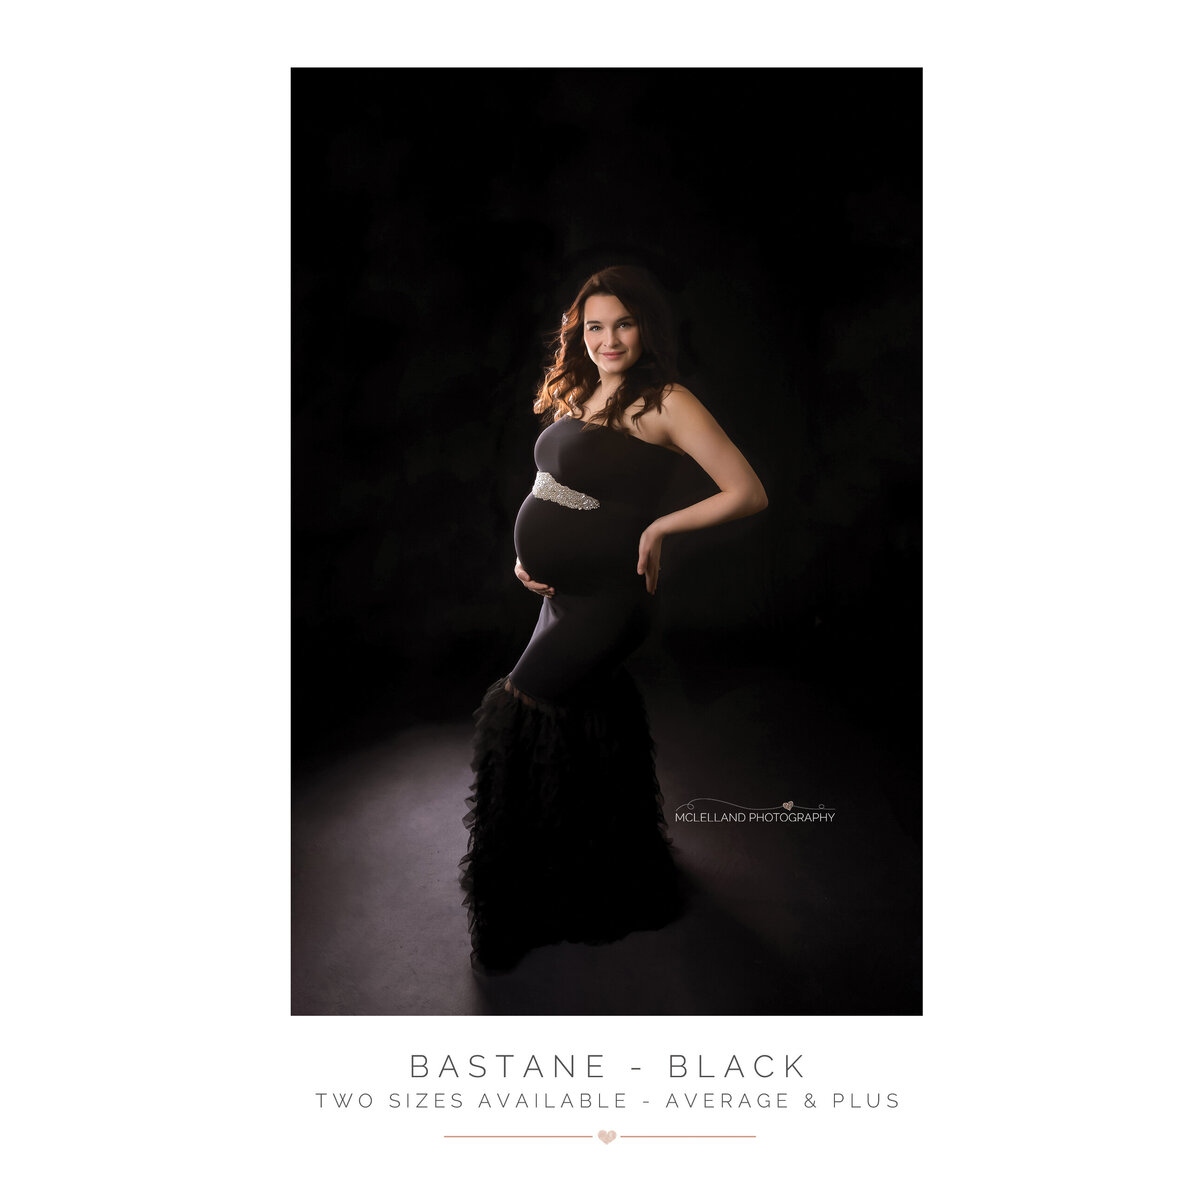 Bastane - Black